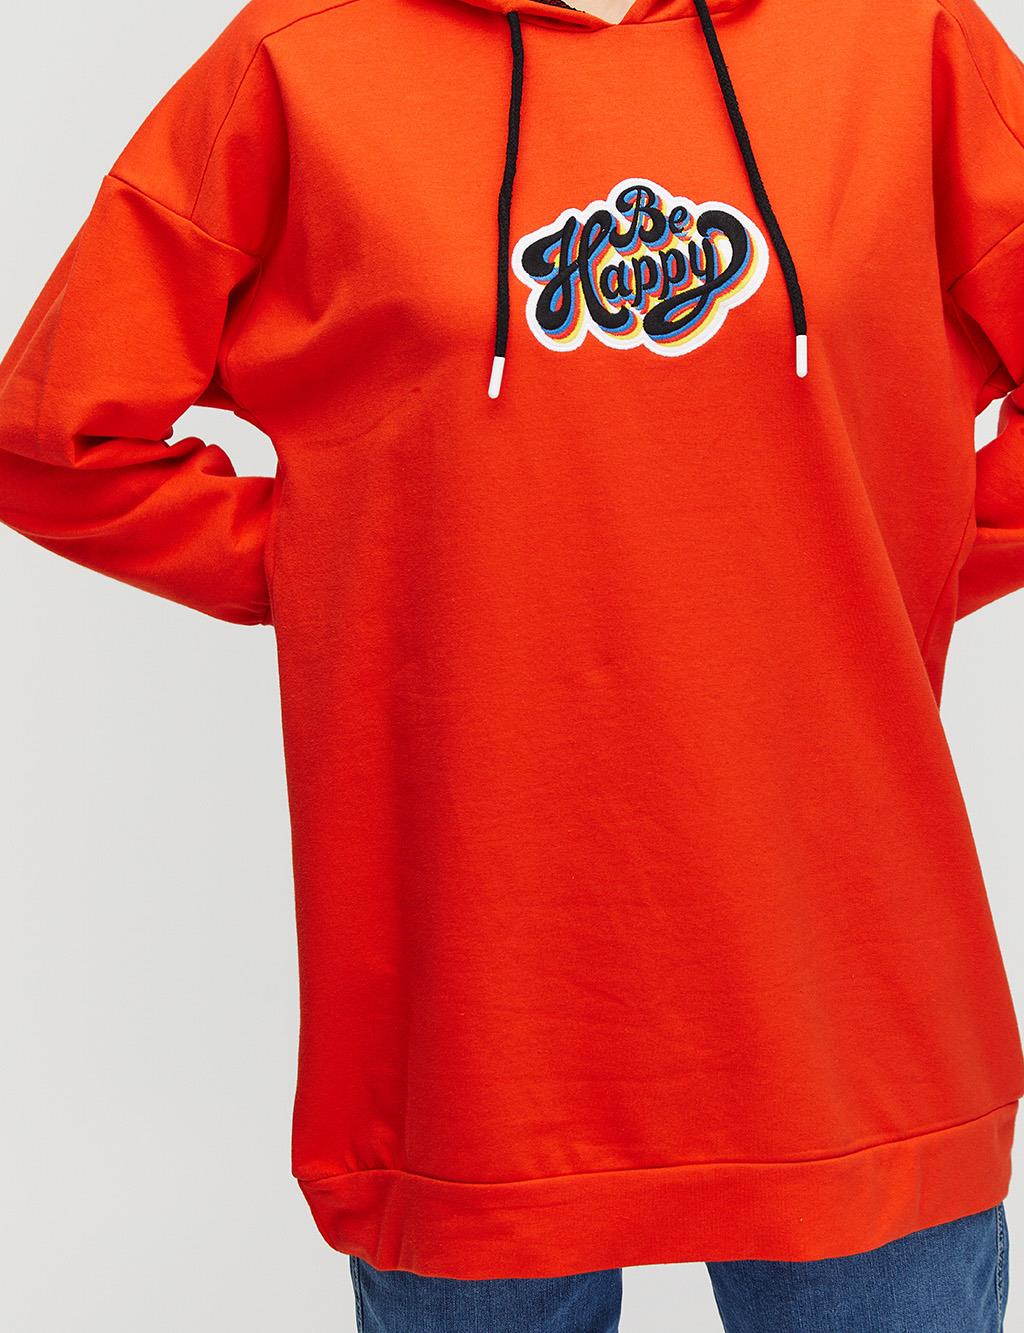 Be Happy Slogan Printed Sweatshirt Orange